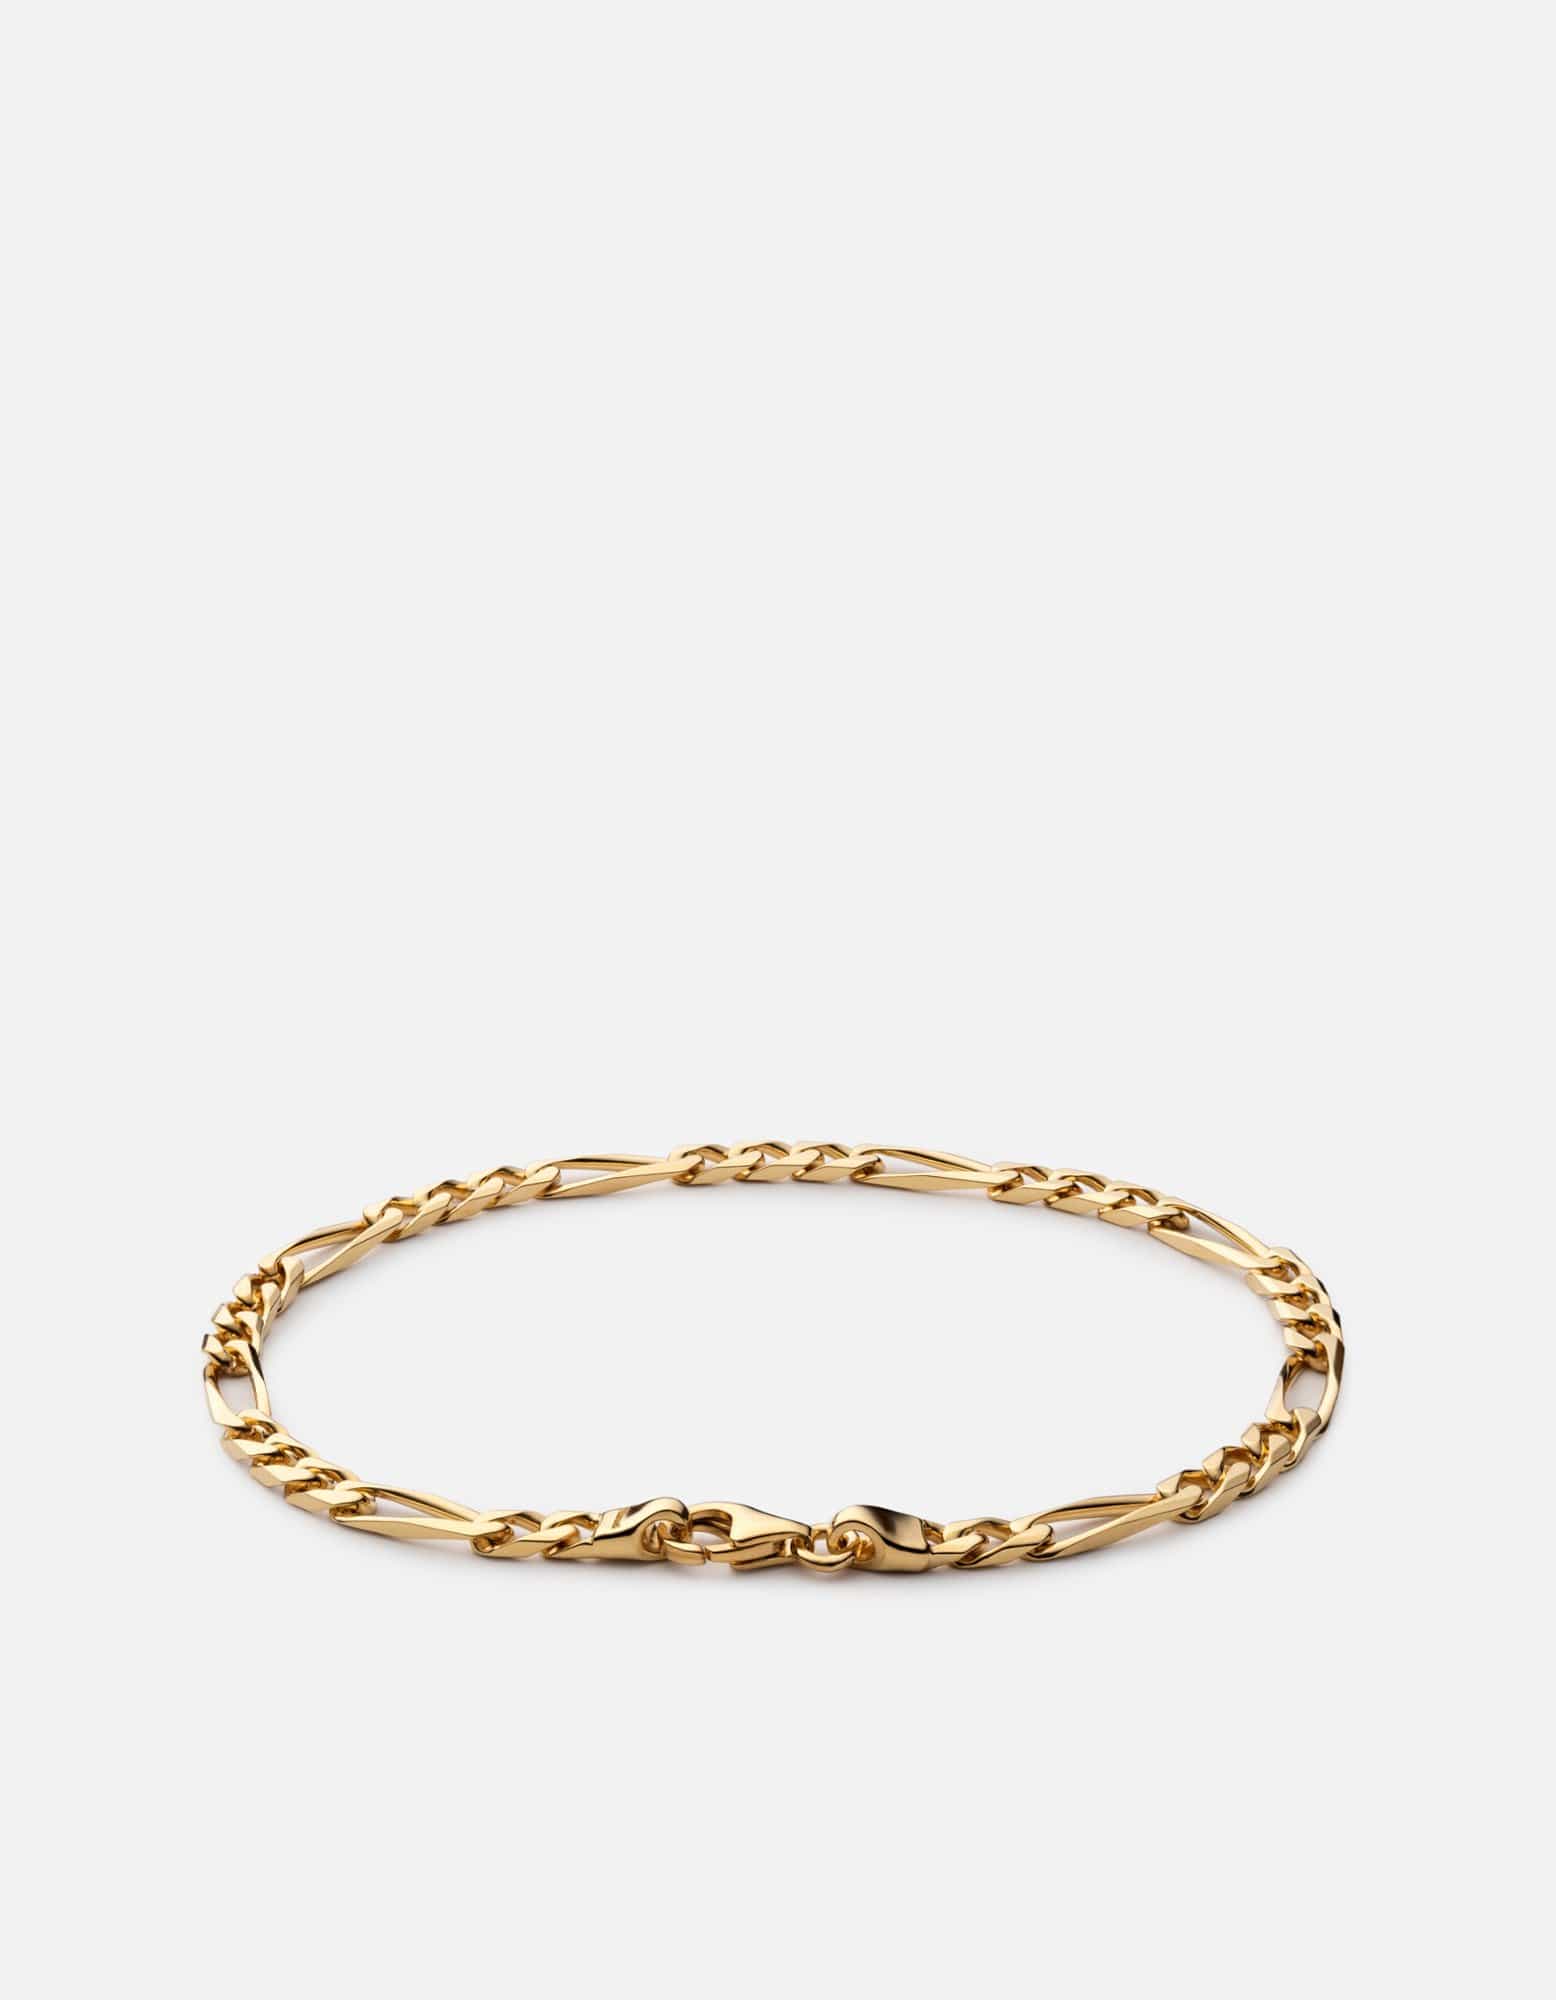 3mm Figaro Chain Bracelet, Gold Vermeil | Men's Bracelets | Miansai